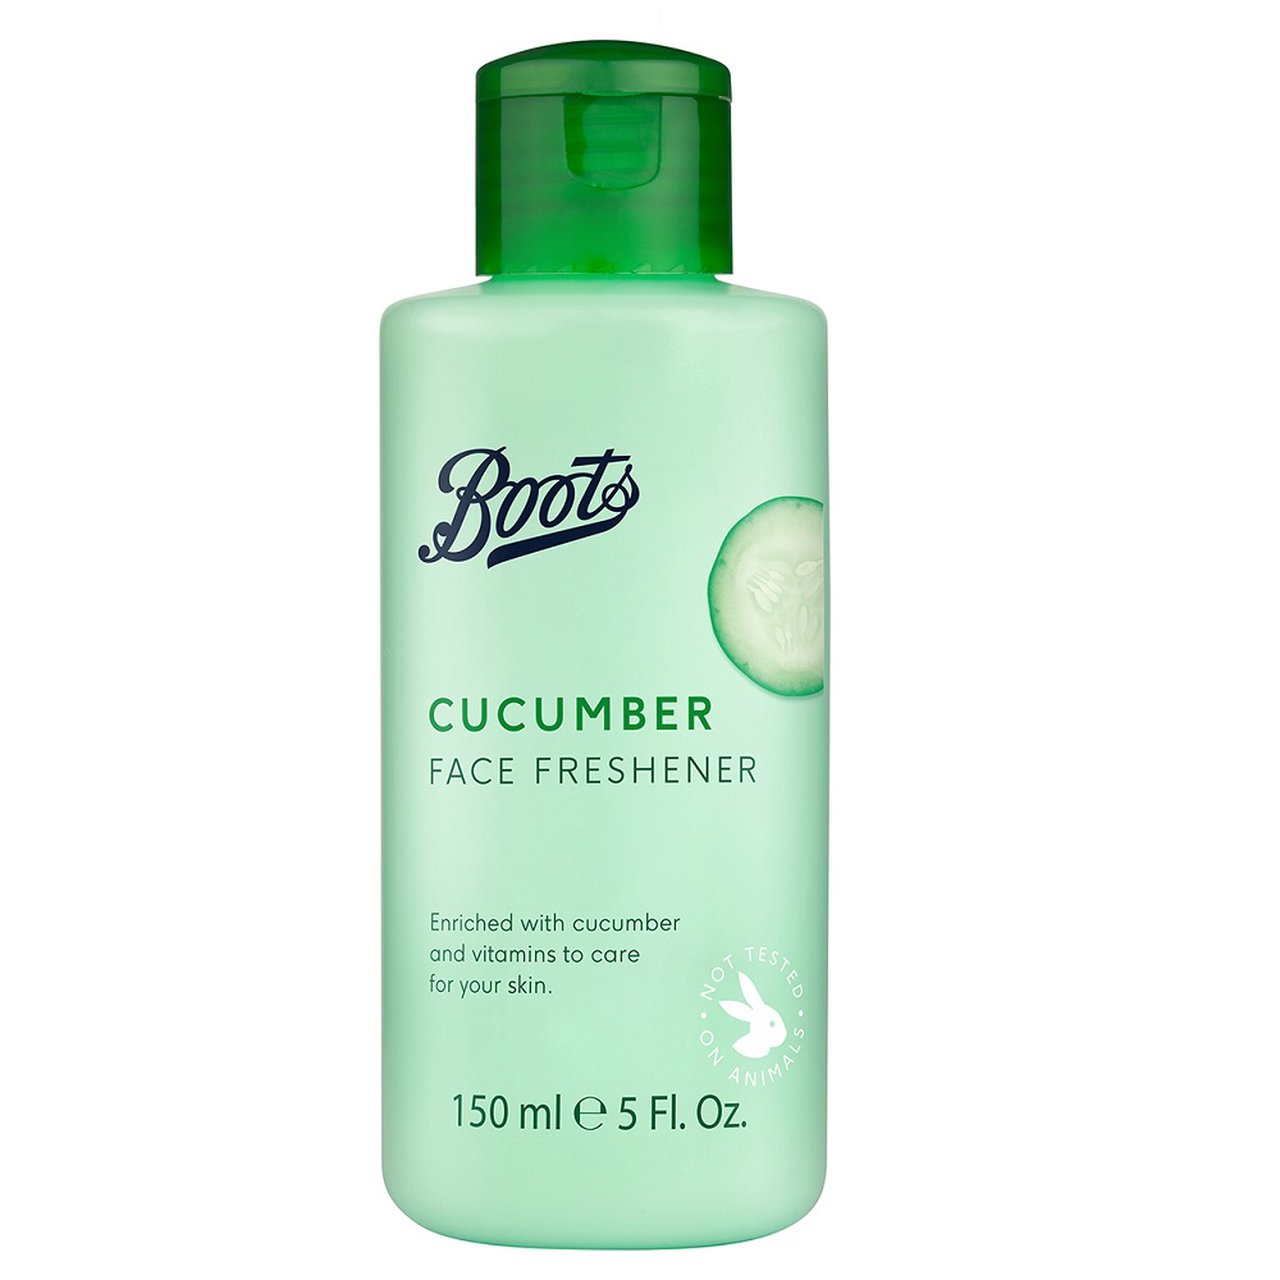 BOOTS Cucumber Face Freshener